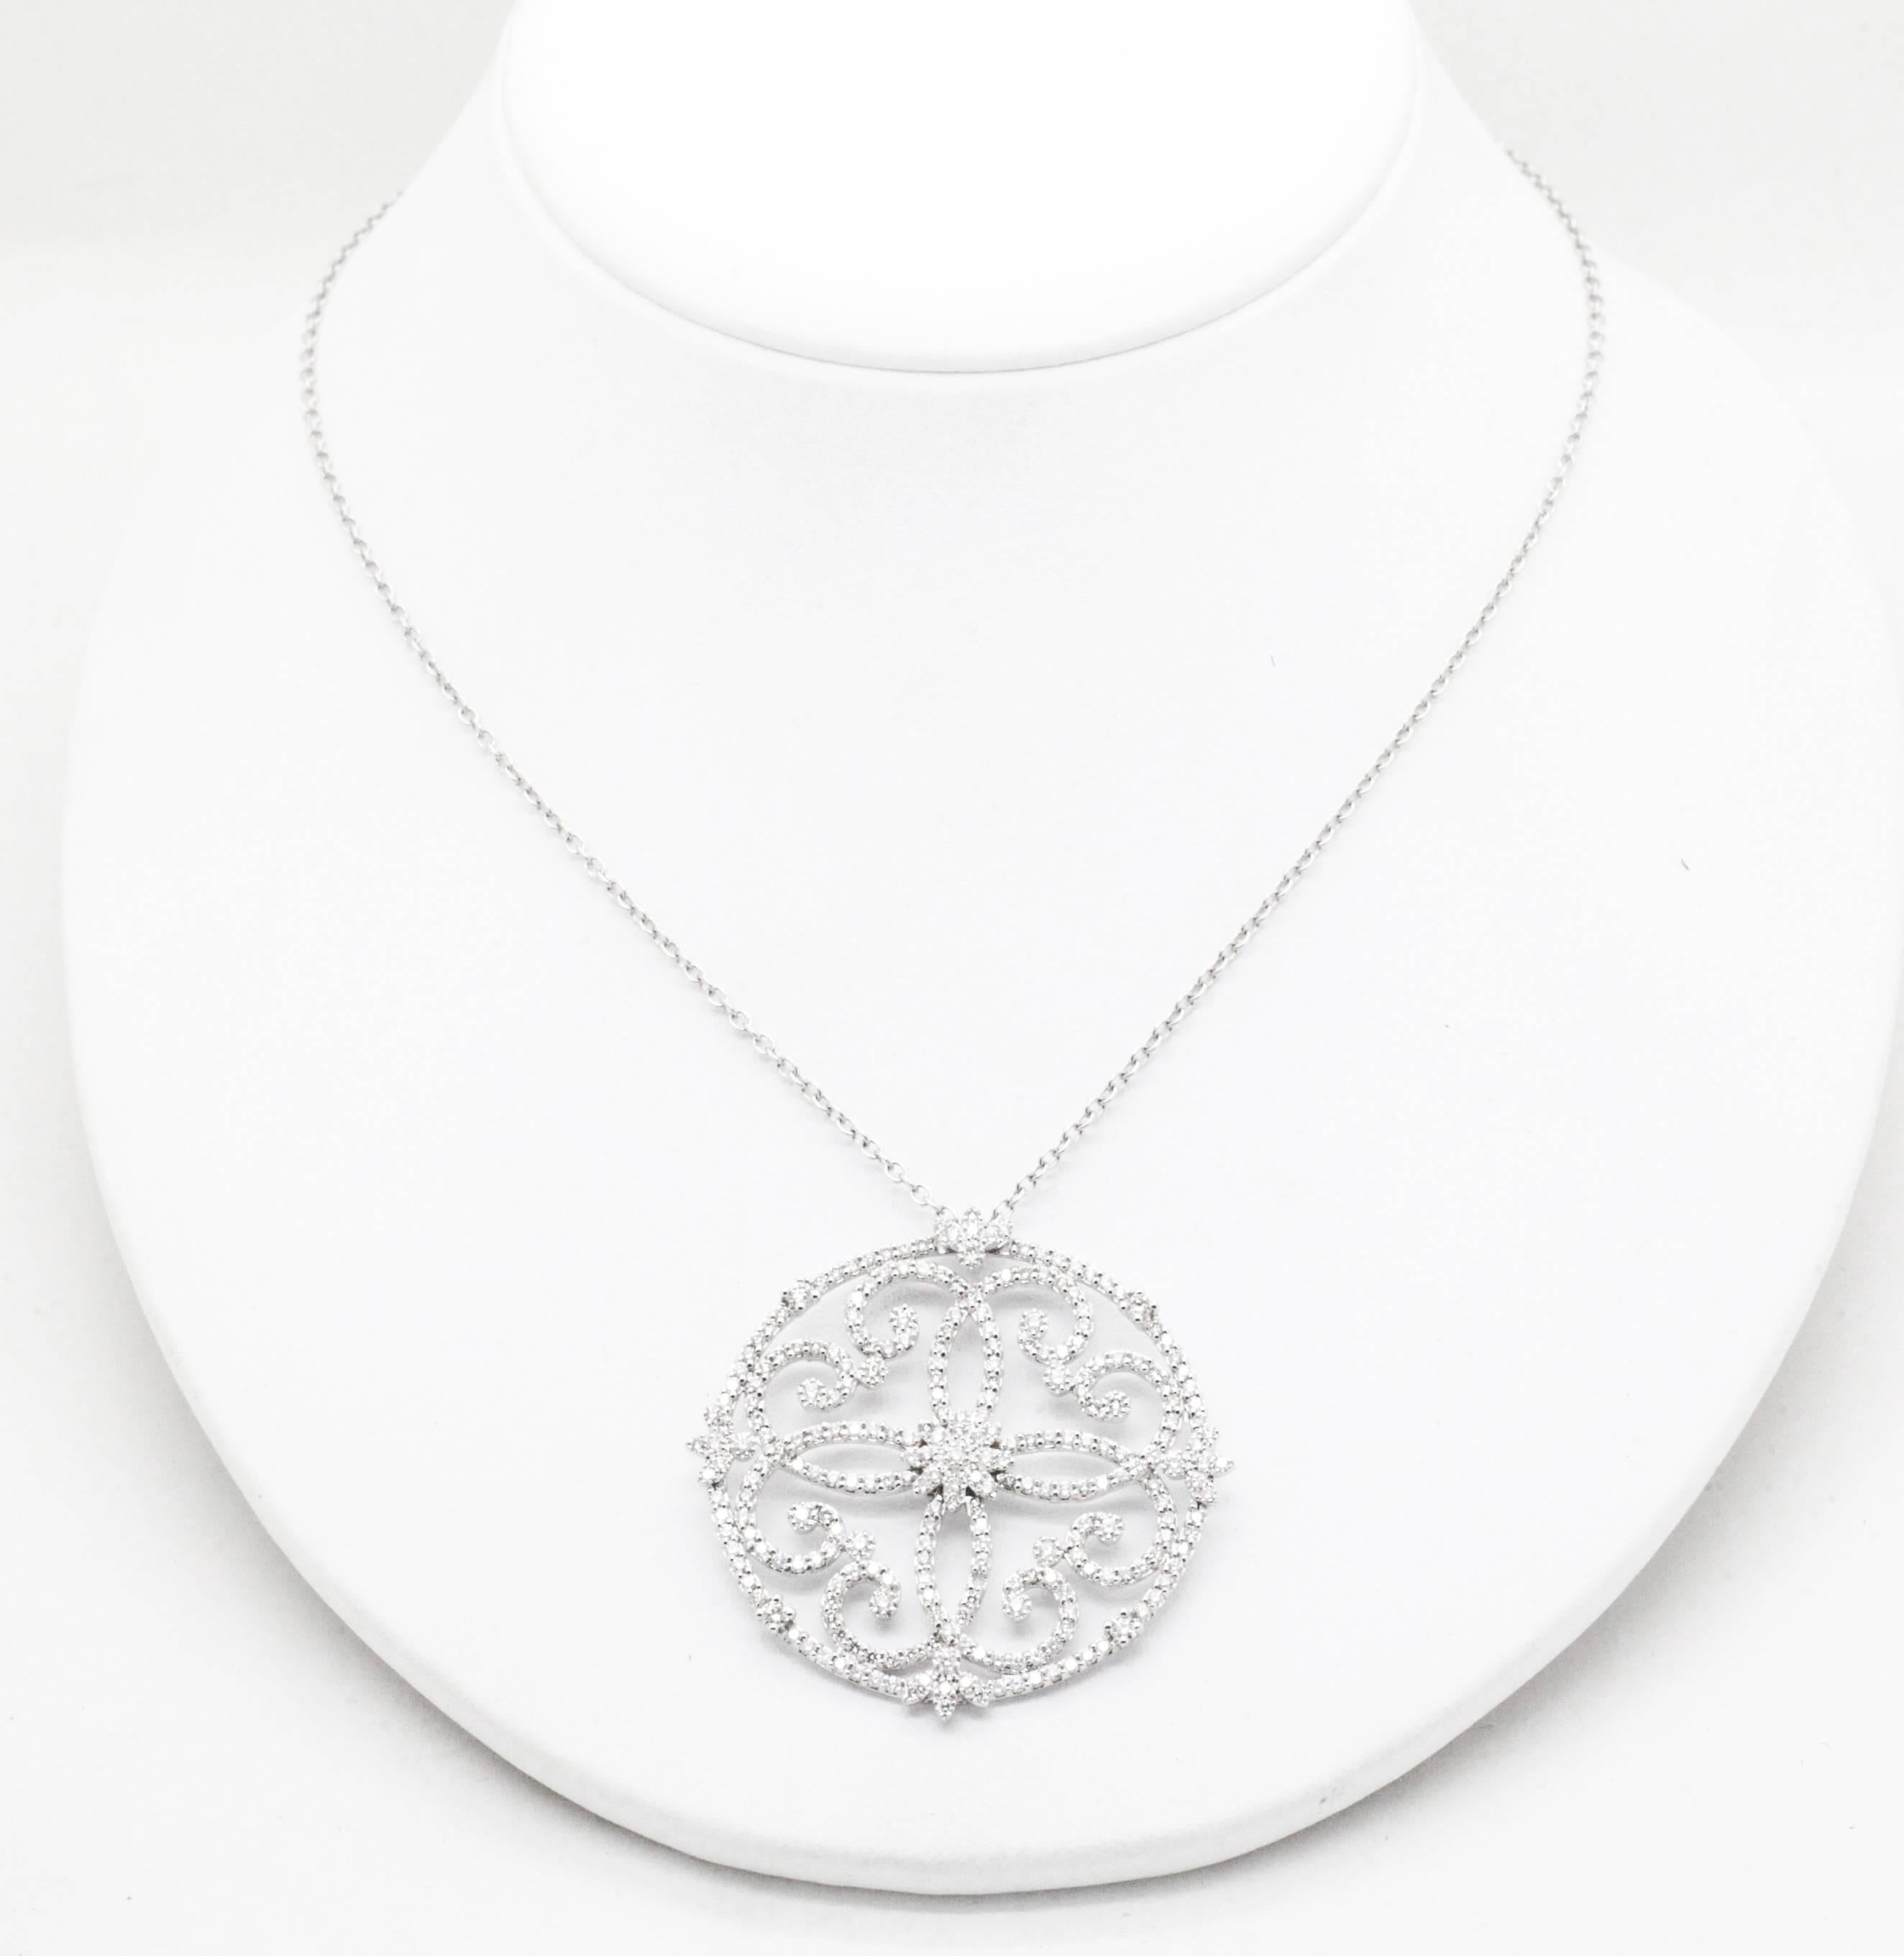 Ferrucci 2.75 Carat White Diamonds Necklace Handmade in 18 Karat White Gold 4